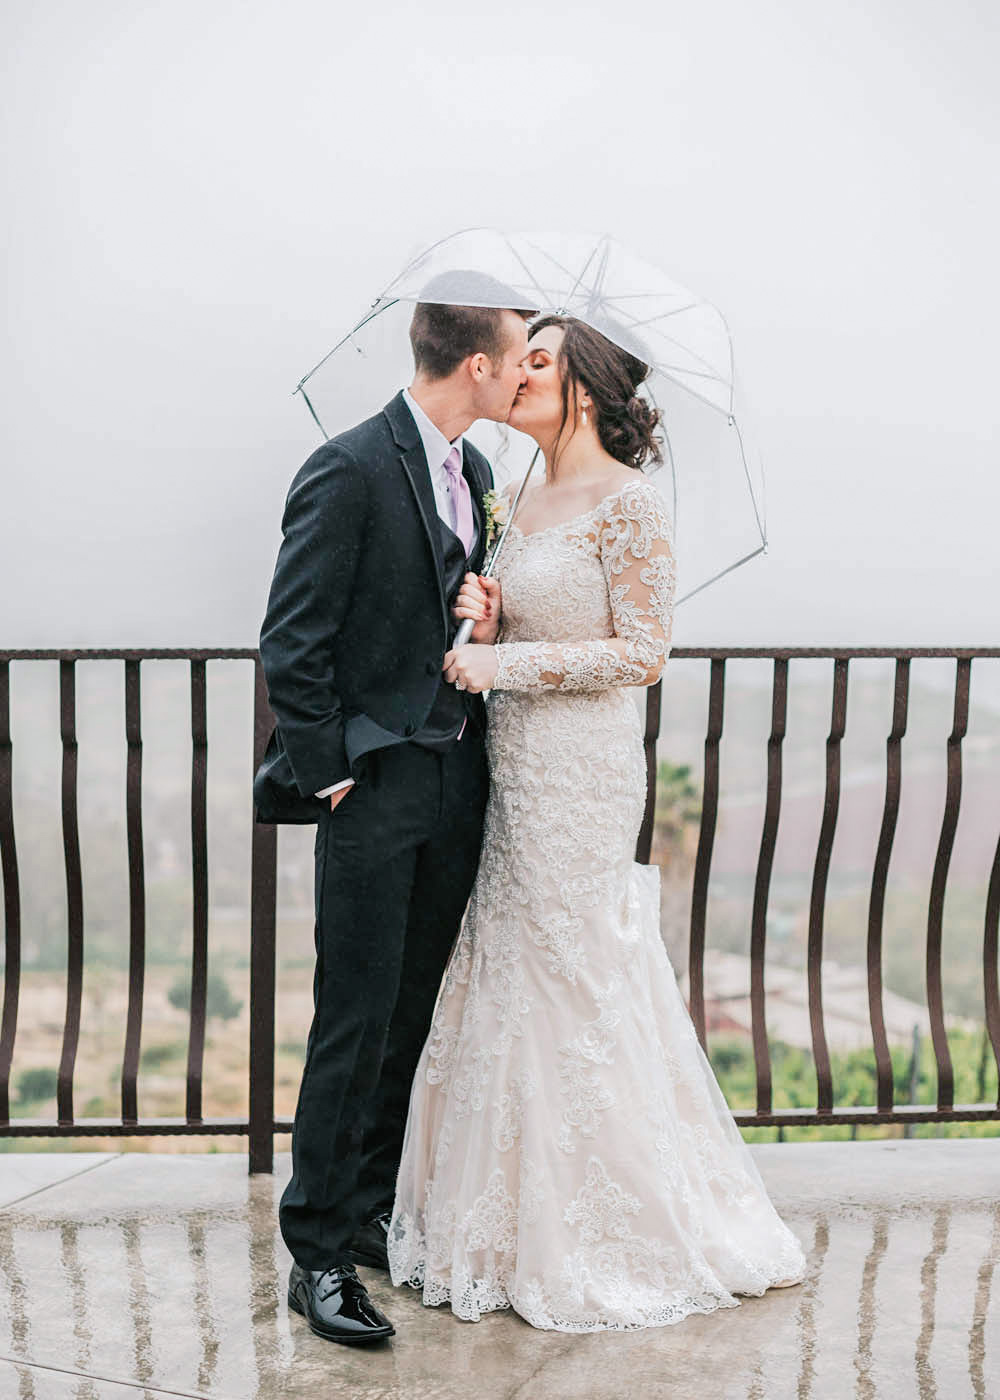 Ciara and Alec share a kiss in the rain during their san diego micro wedding.